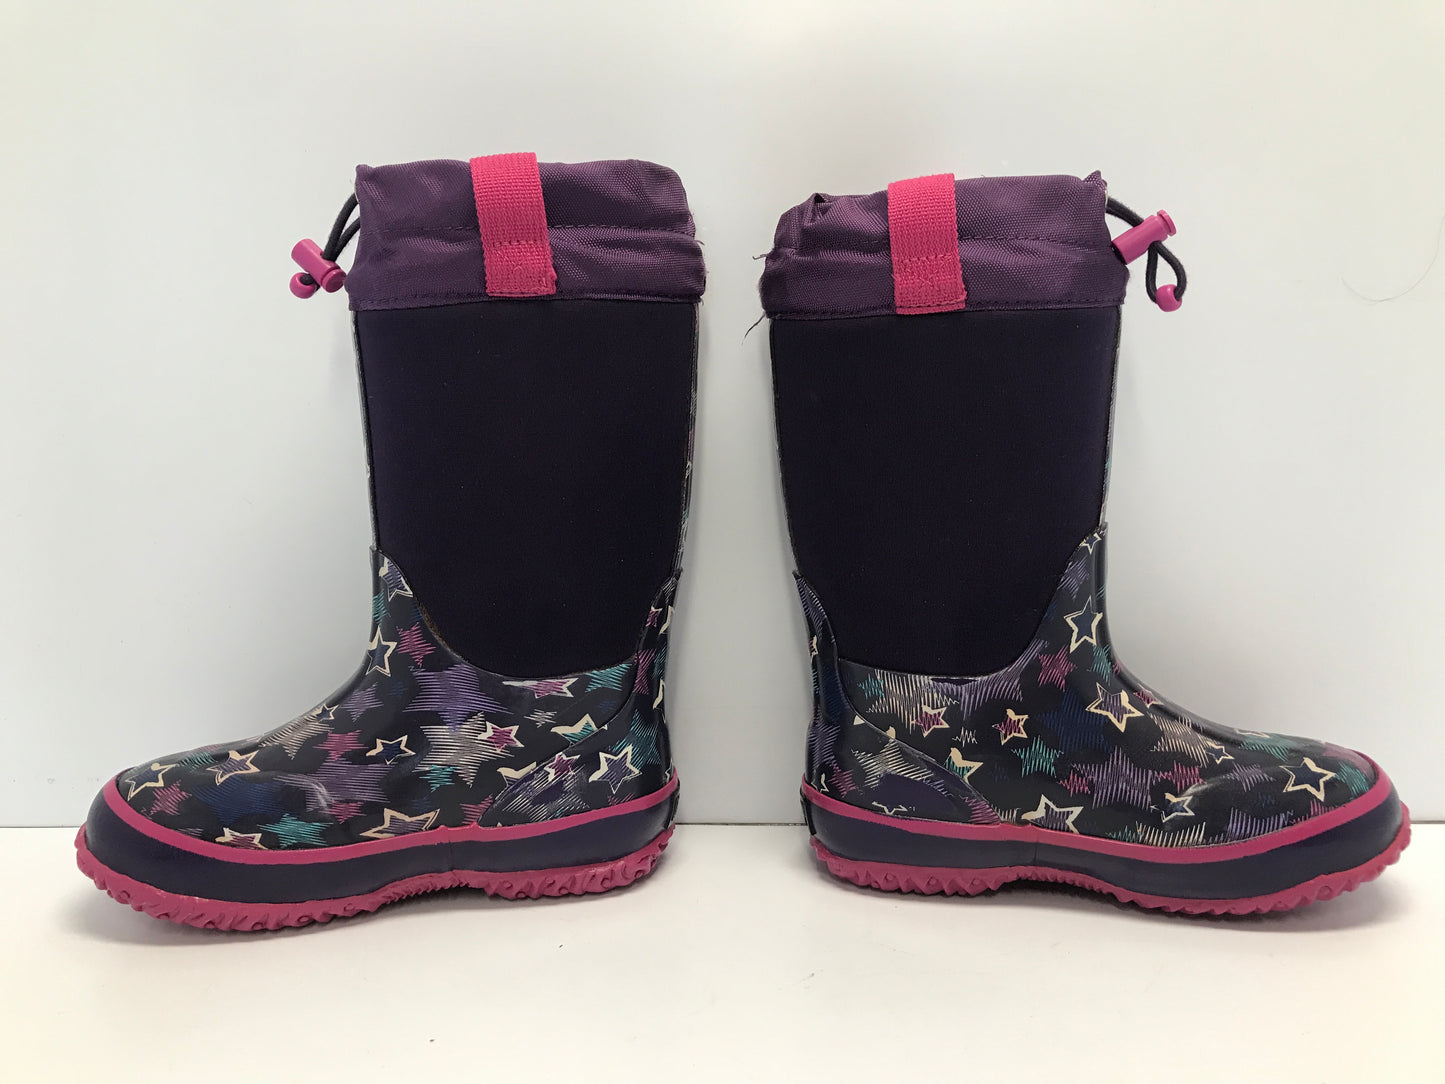 Winter Boots Rain Child Size 13  Bogs Style Cougar Purple Stars Pink Like New